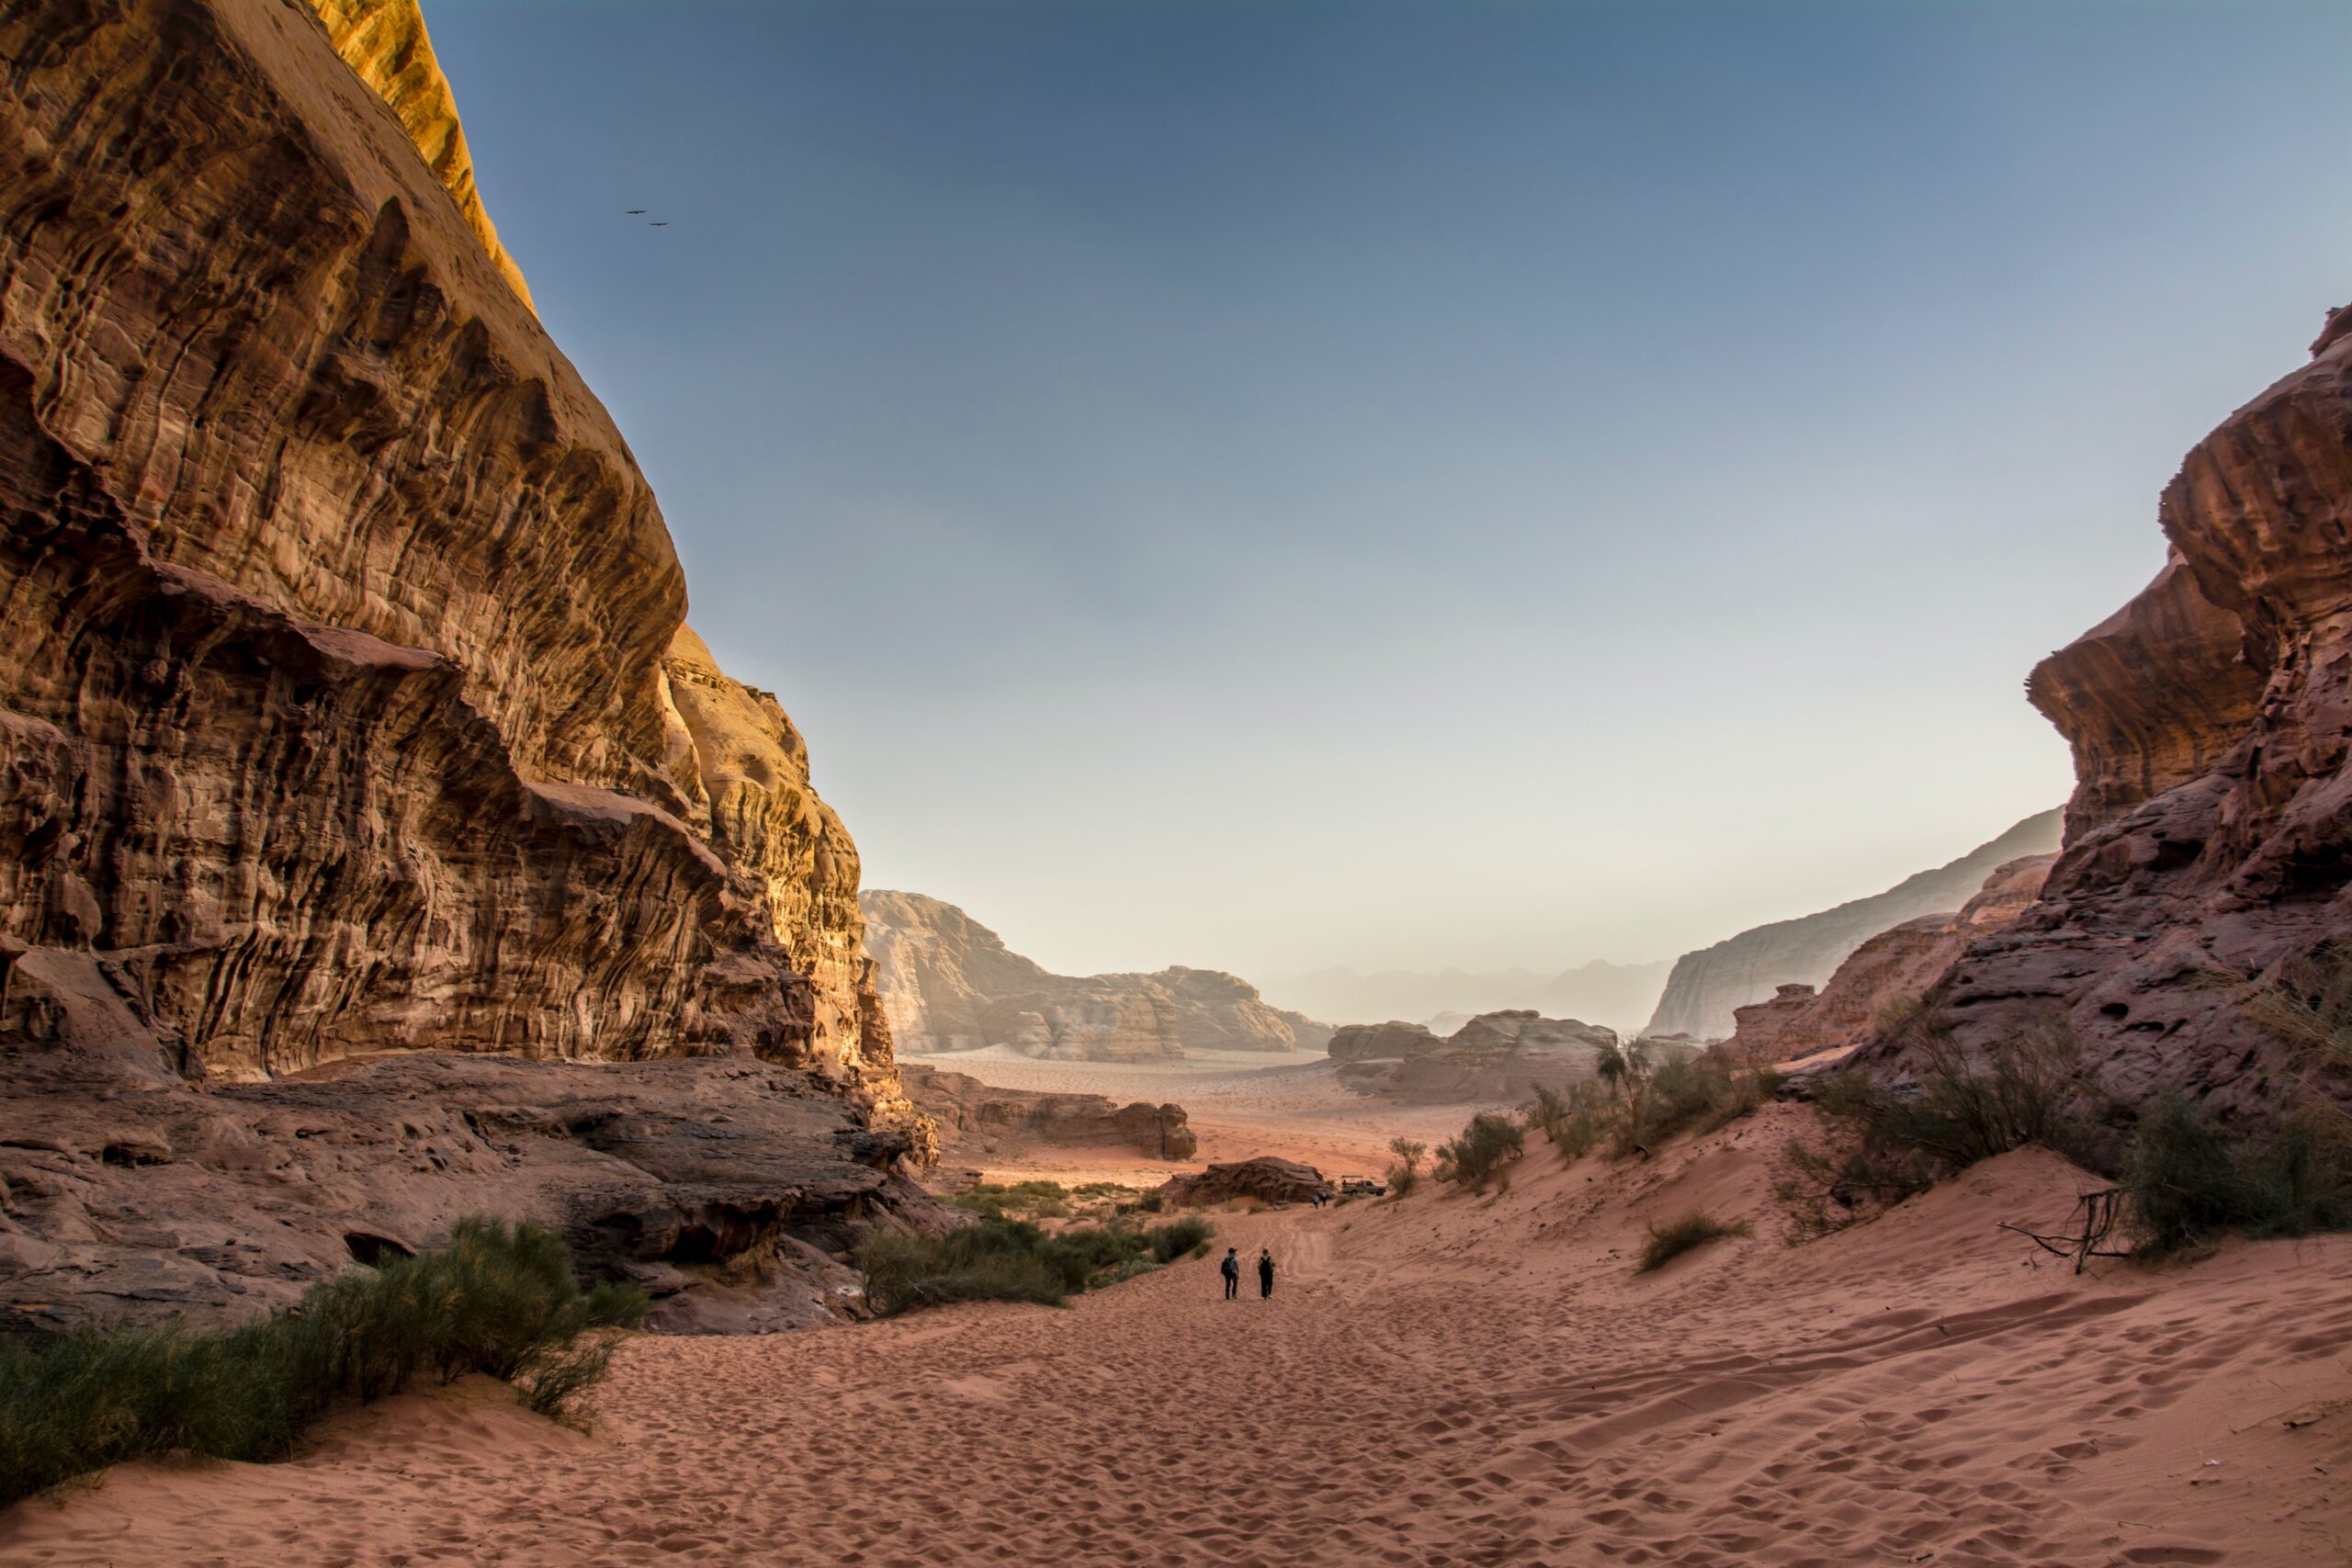 Hiking through the iconic desert landscape of wadi rum